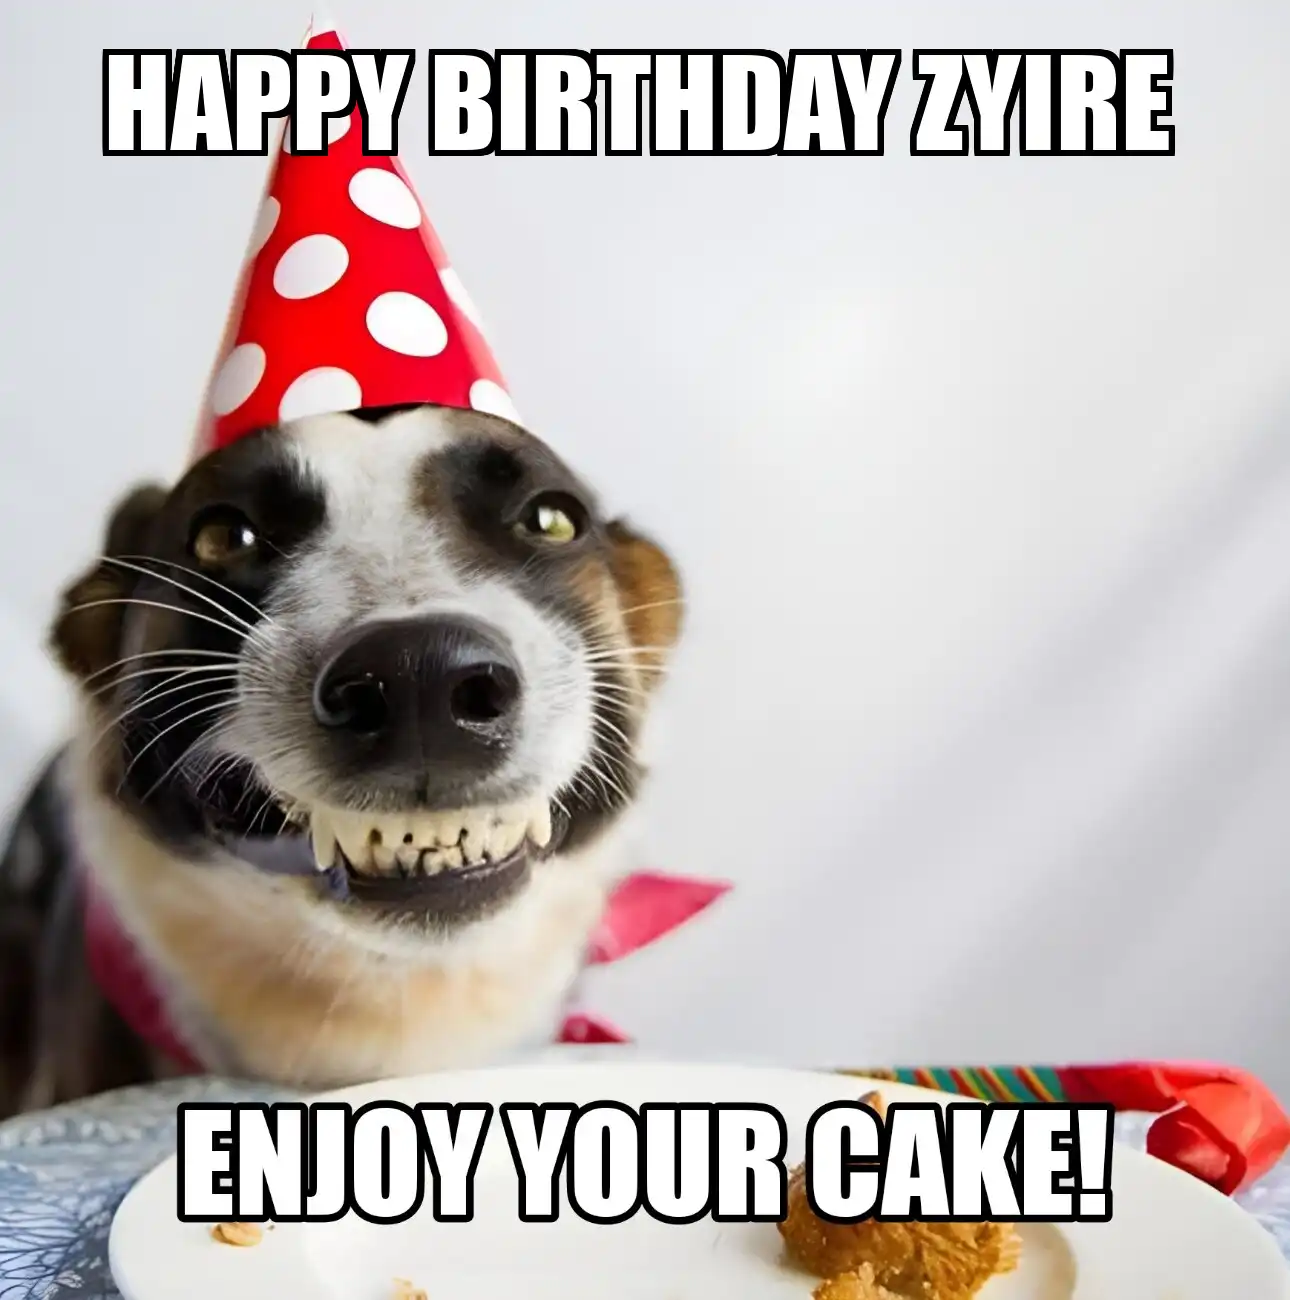 Happy Birthday Zyire Enjoy Your Cake Dog Meme